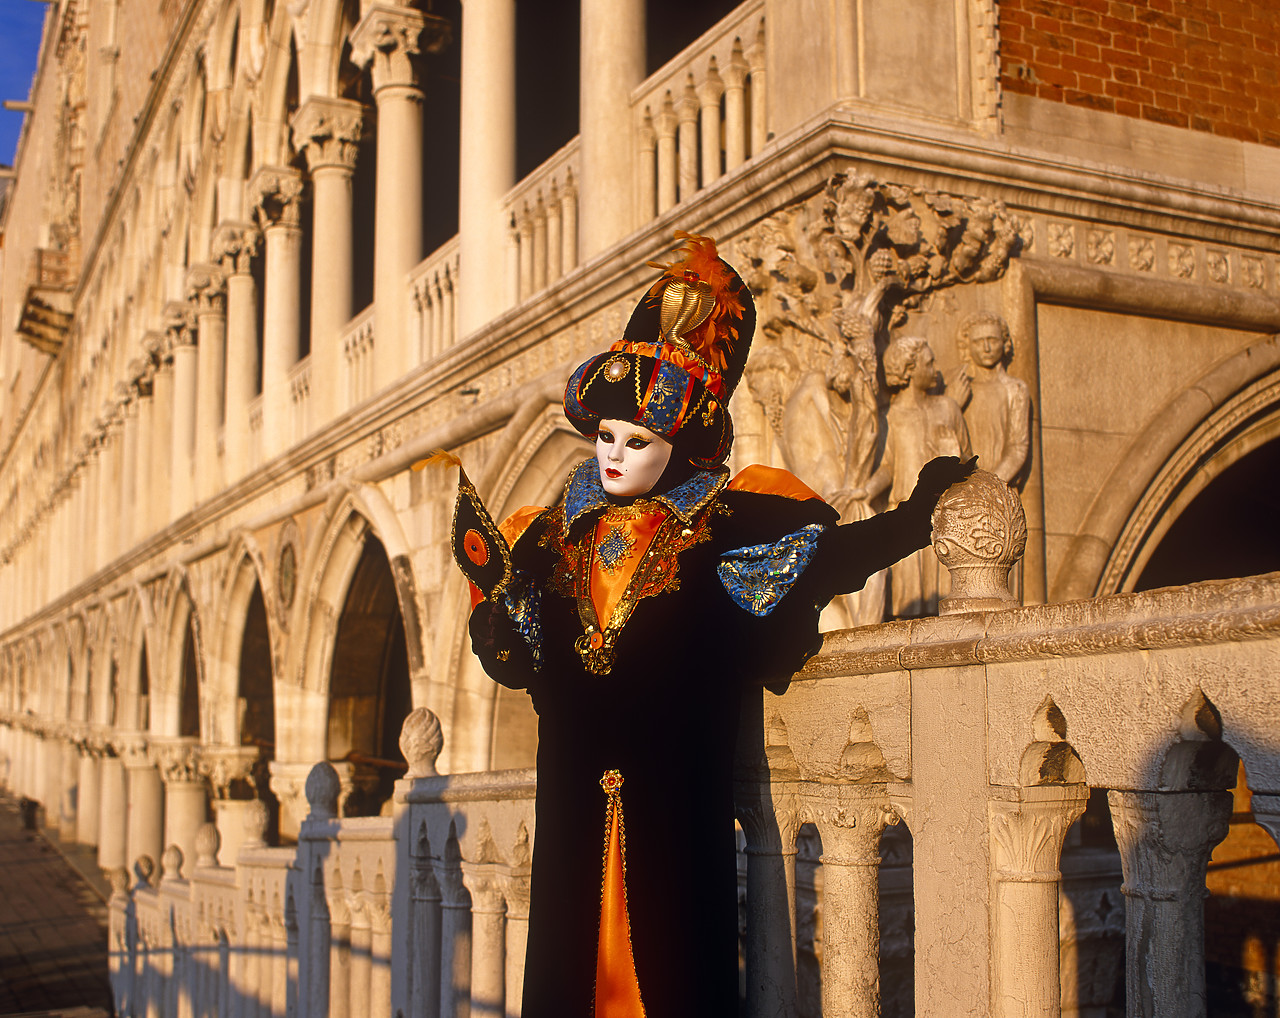 #990099-1 - Venice Carnivale Mask, Venice, Italy